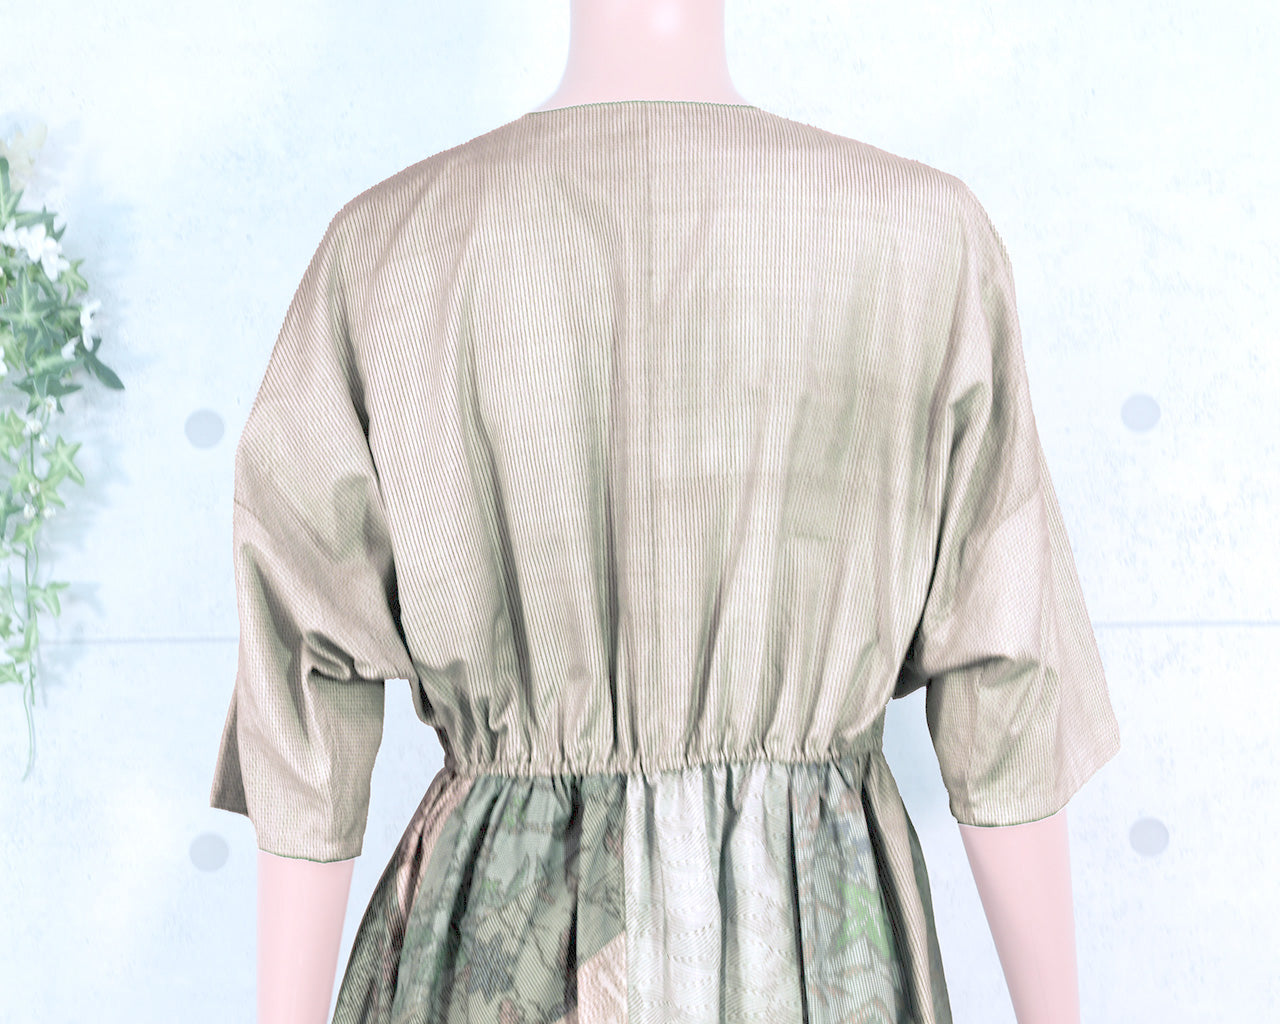 Japanese Vintage Kimono Remake Tunic Dress, White Oshima, Kasuri Pattern, Gather, Patchwork